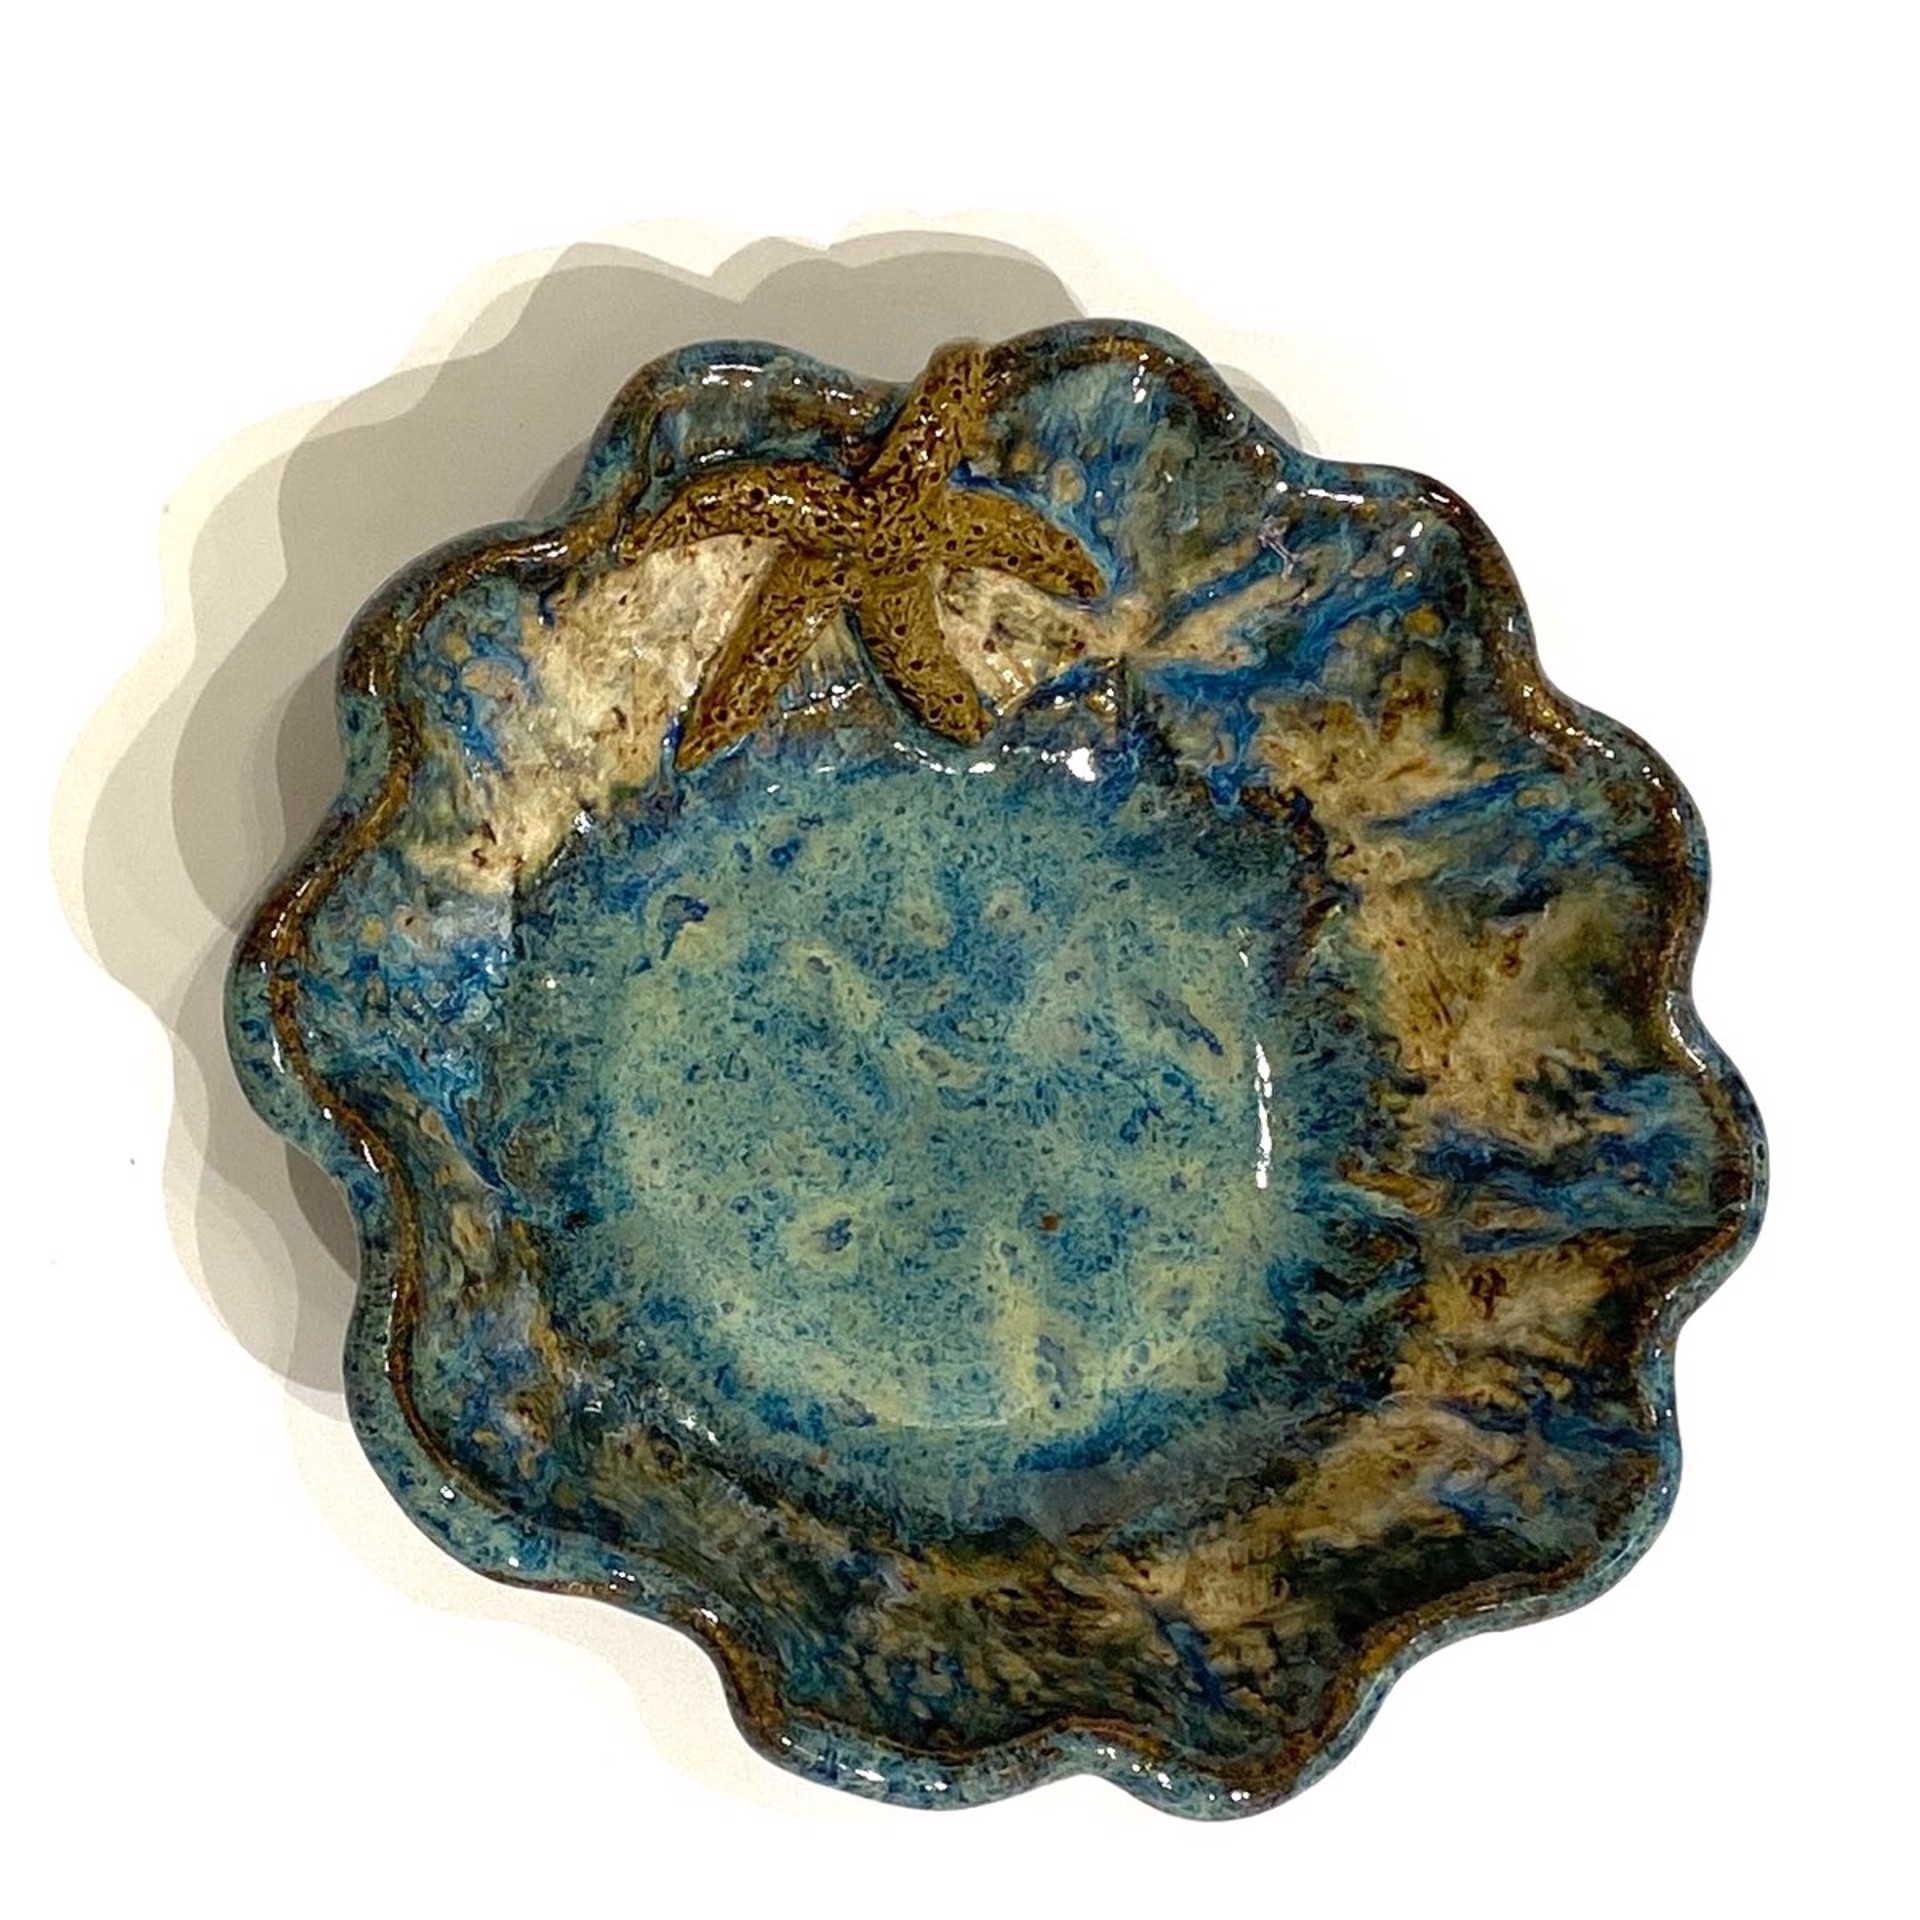 LG23-1033 Mini Round Scalloped Bowl with Starfish (Blue Glaze) by Jim & Steffi Logan